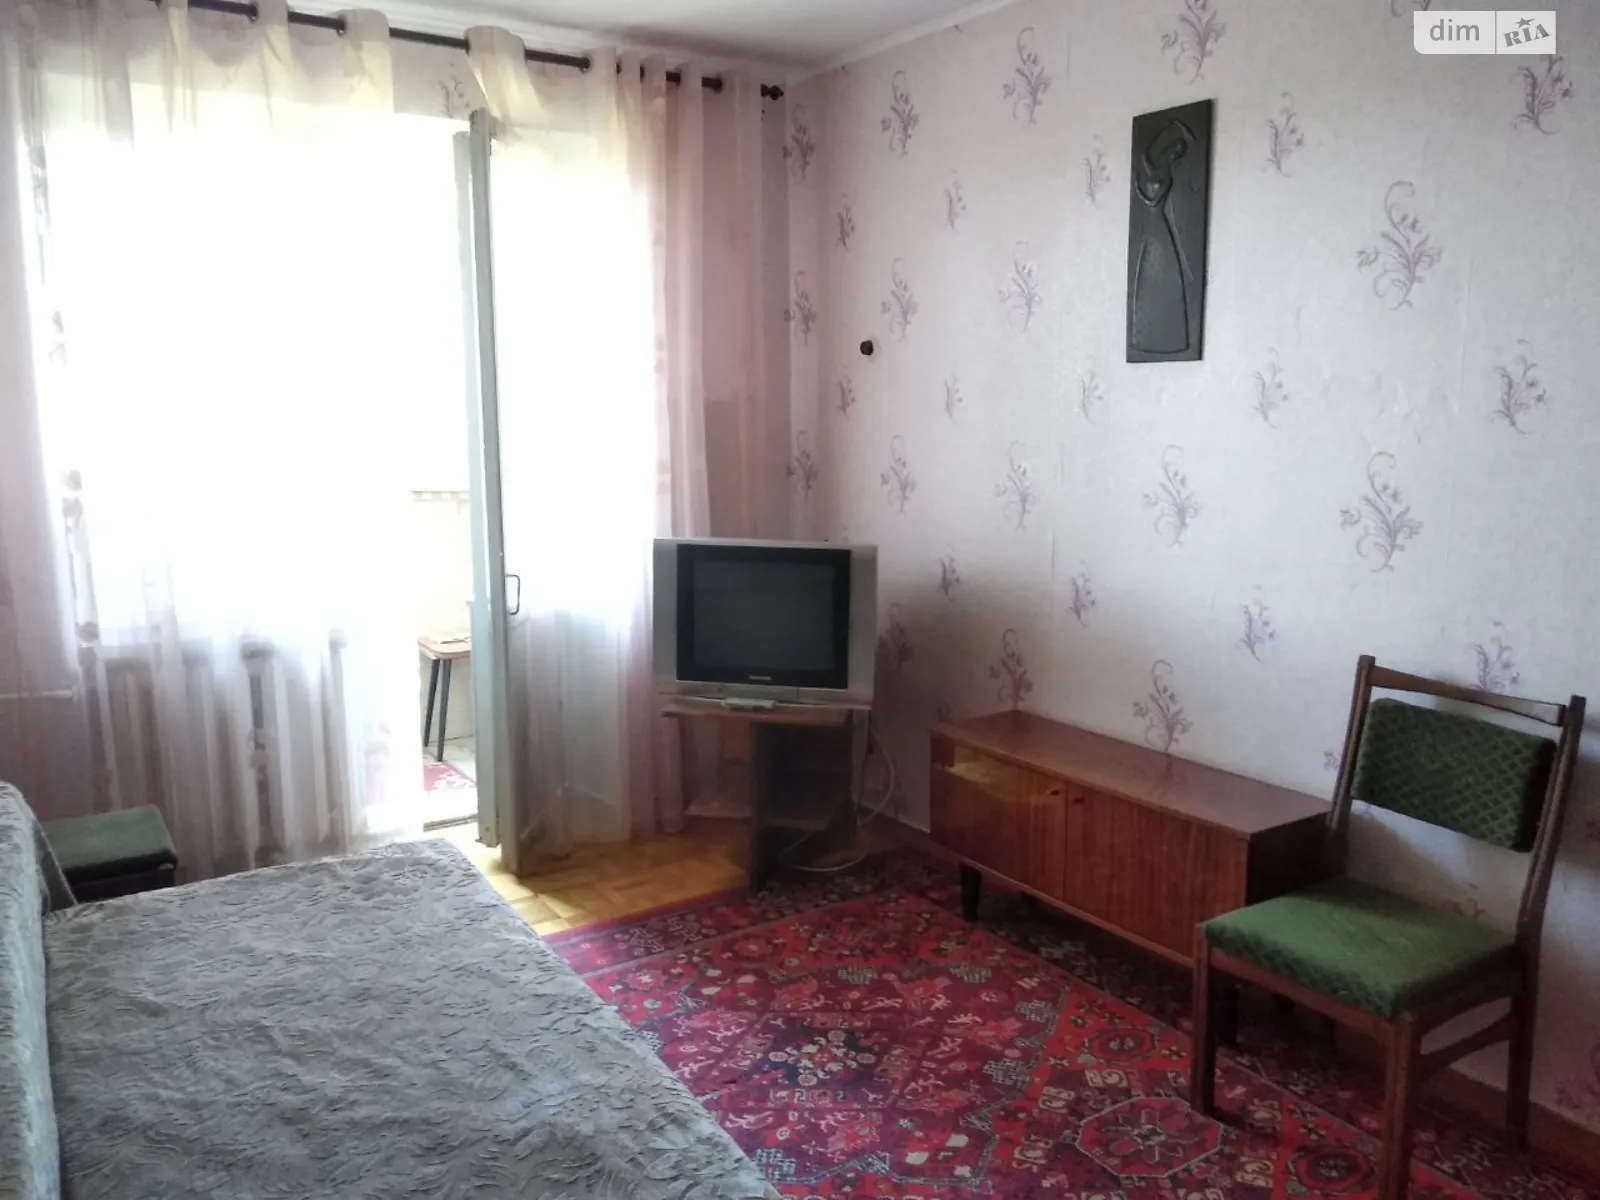 Сдается в аренду комната 52 кв. м в Харькове - фото 2